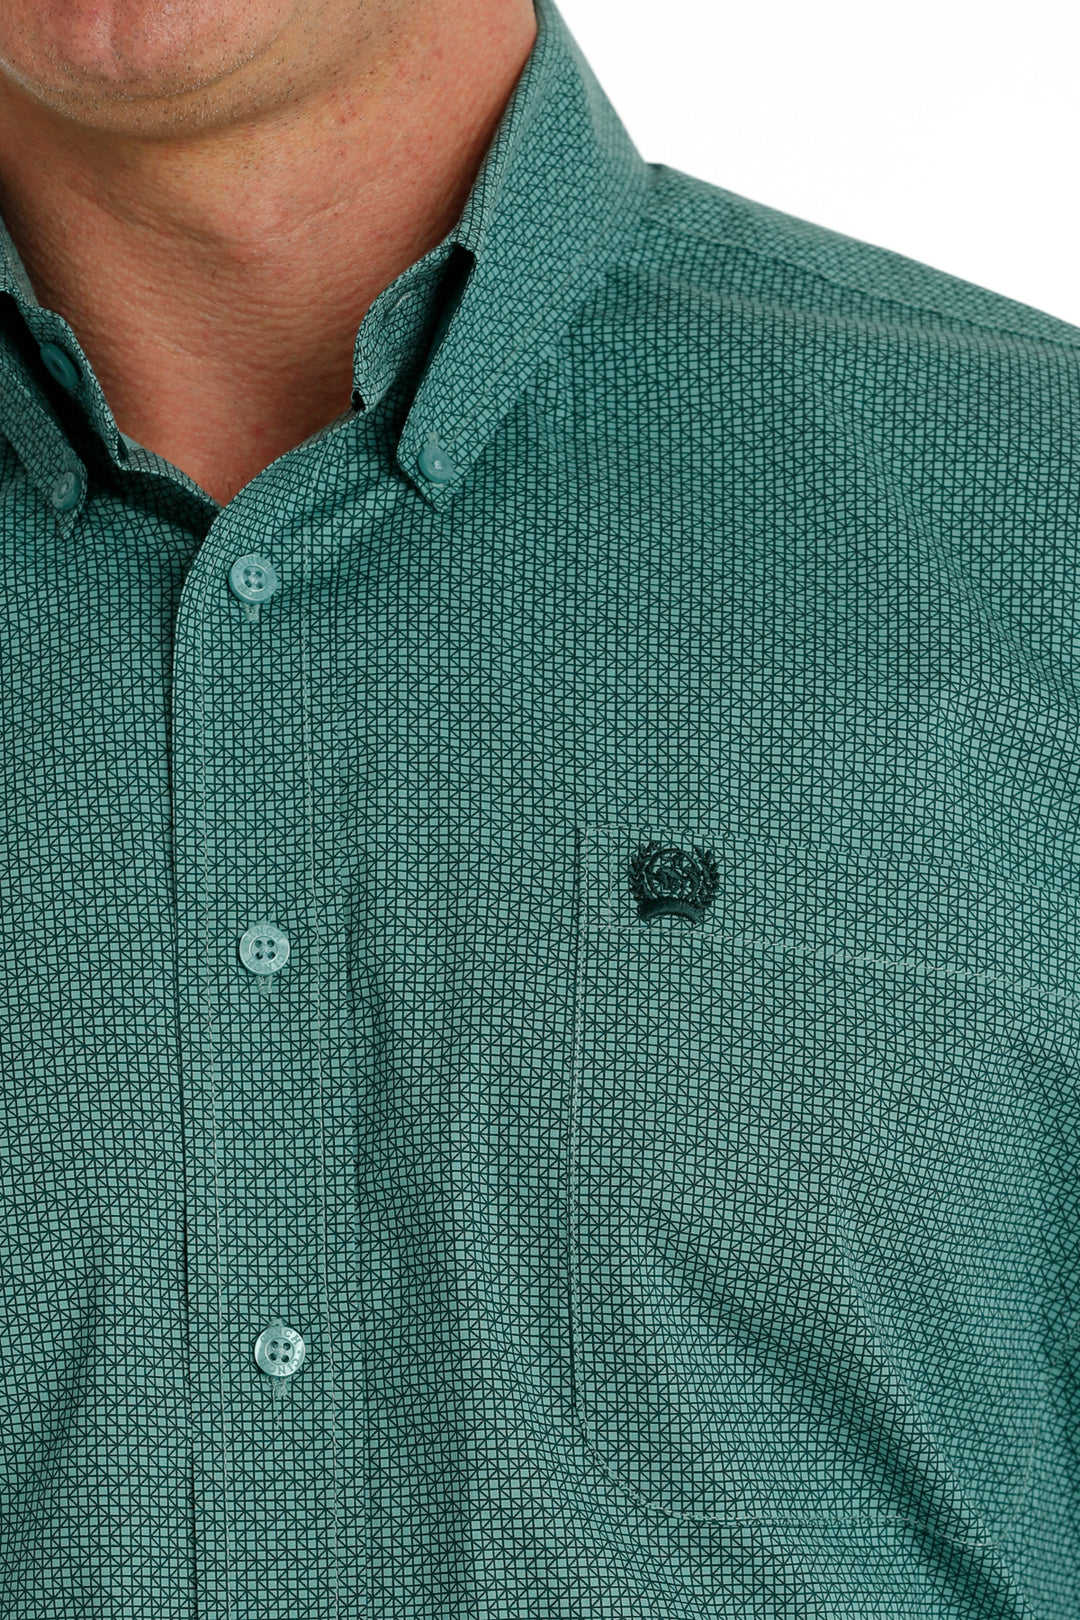 Men's Cinch Geometric Print Turquoise Button Long Sleeve Shirt - MTW1105706